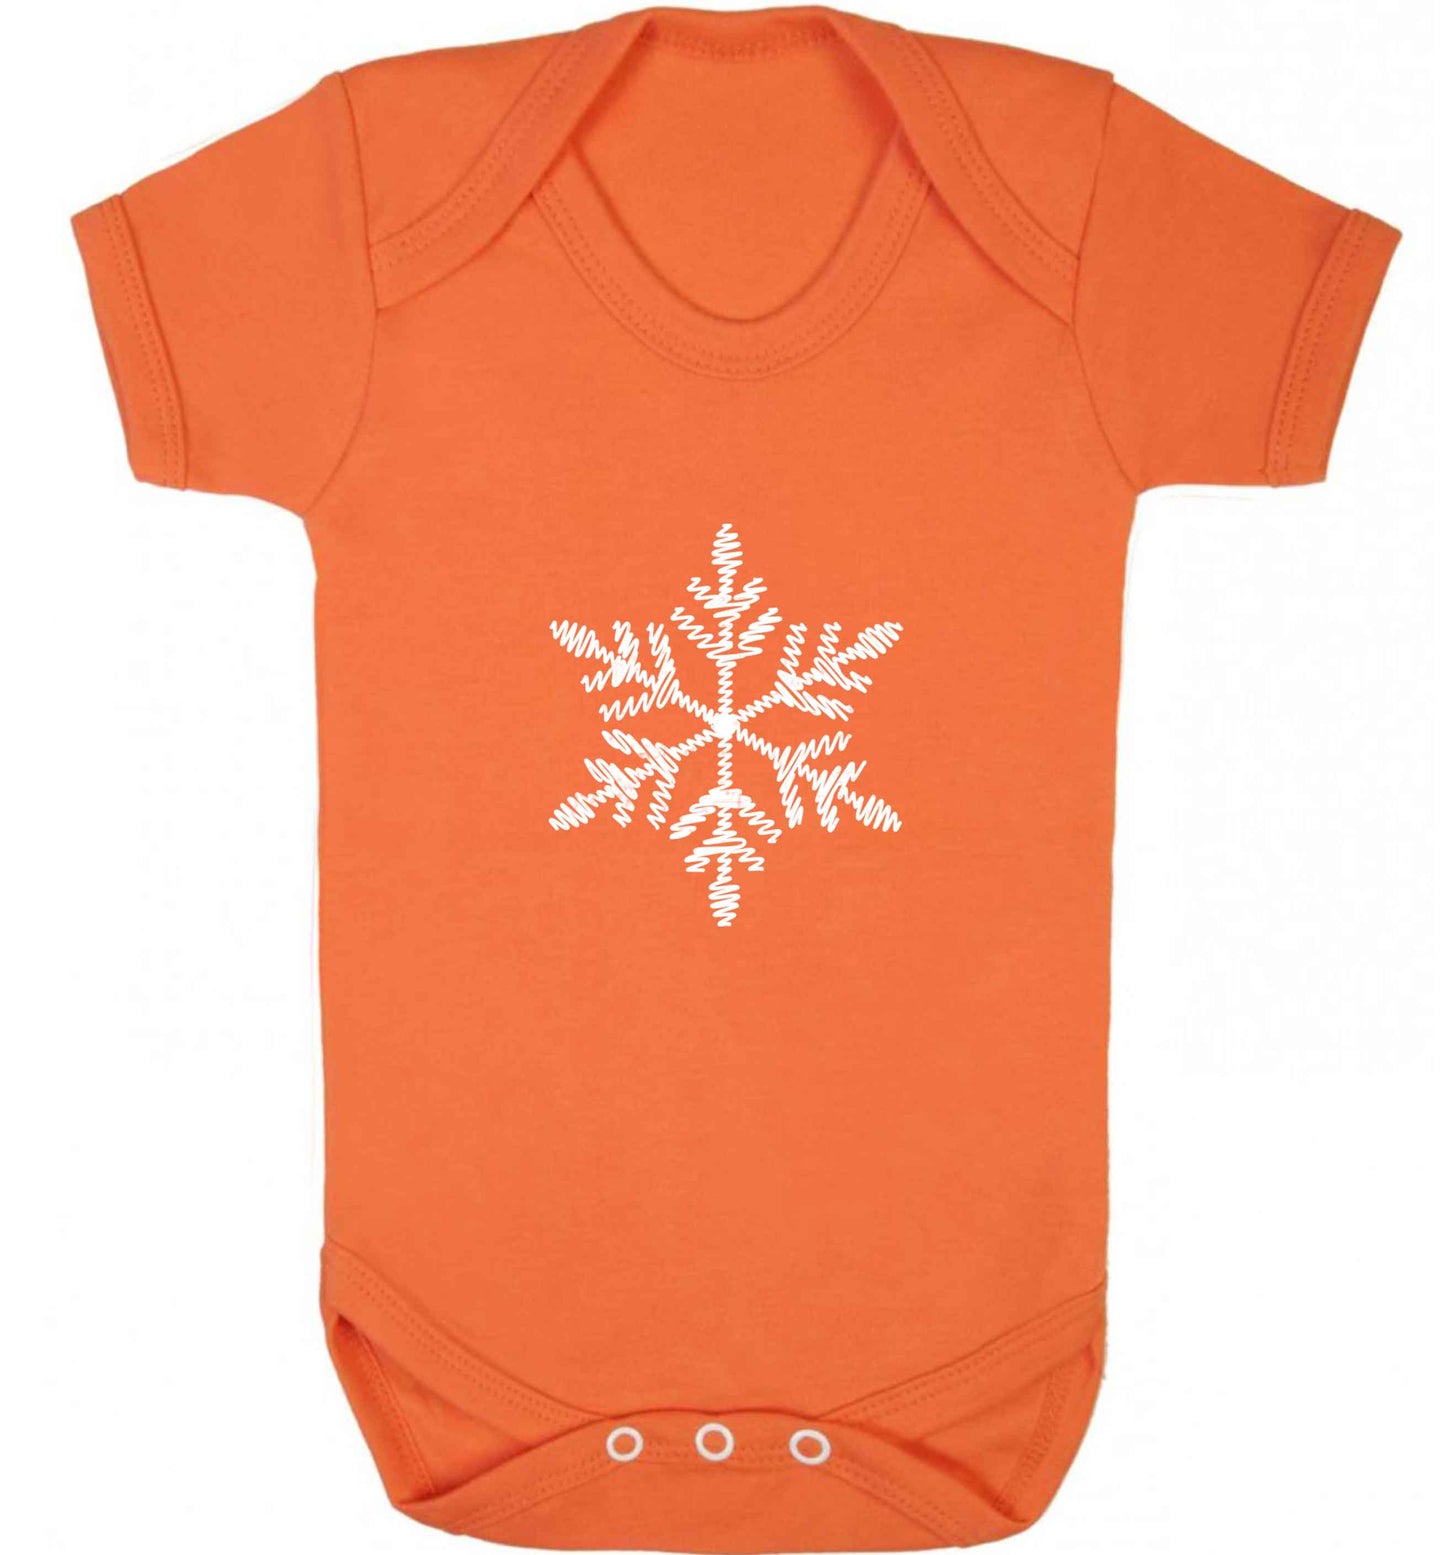 Snowflake baby vest orange 18-24 months